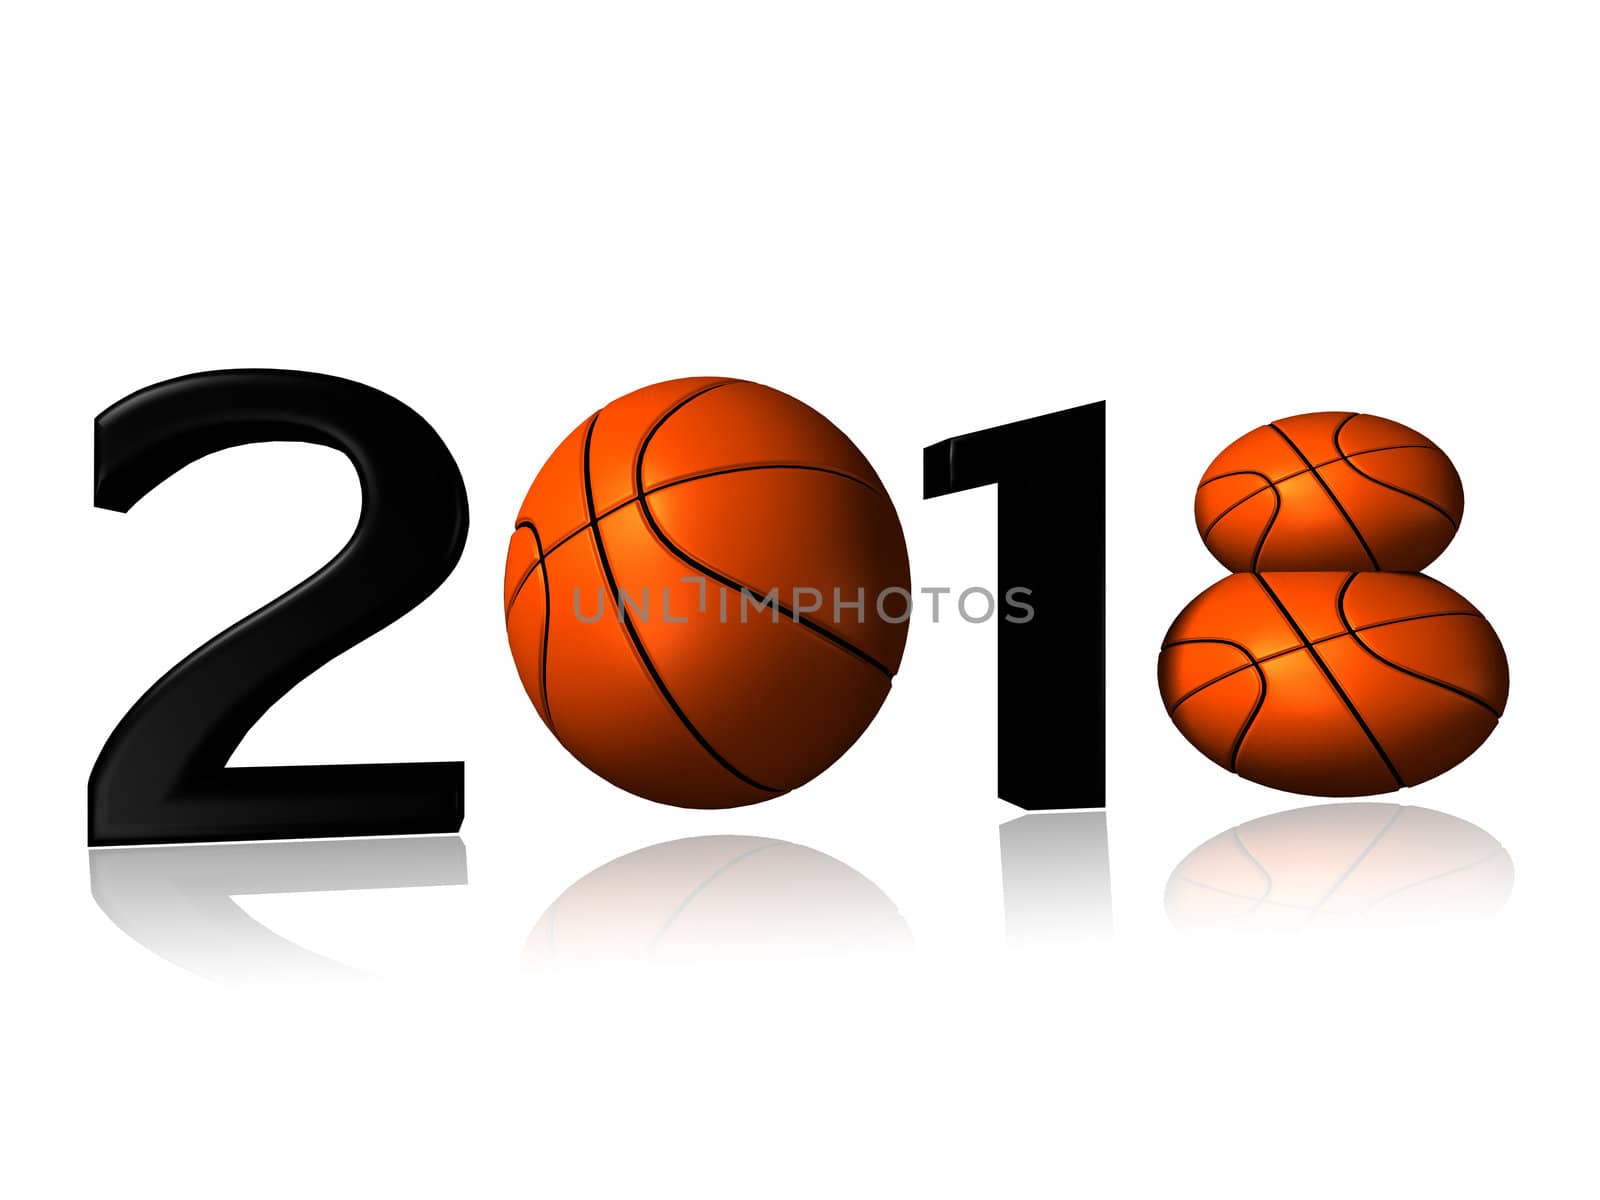 It's a big 2018 basket logo on a white background